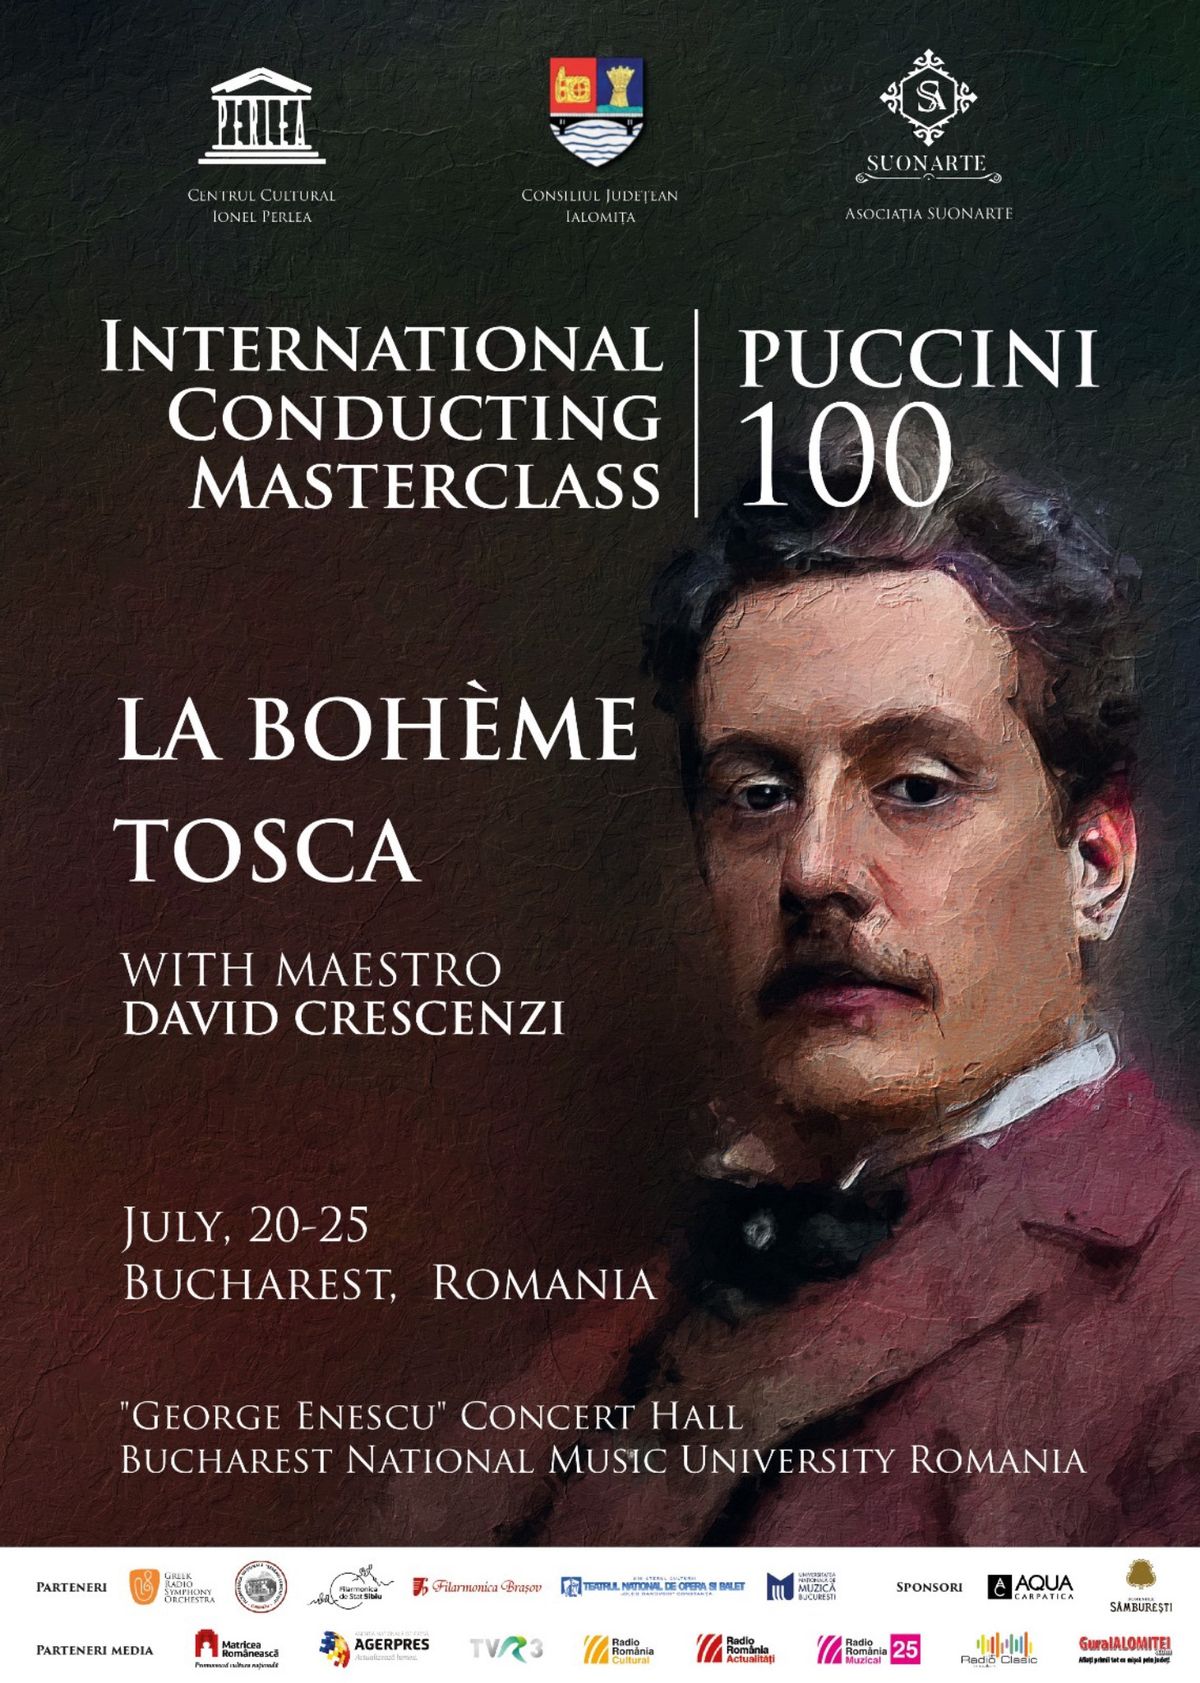 Puccini 100 International Conducting Masterclass with Maestro David Crescenzi